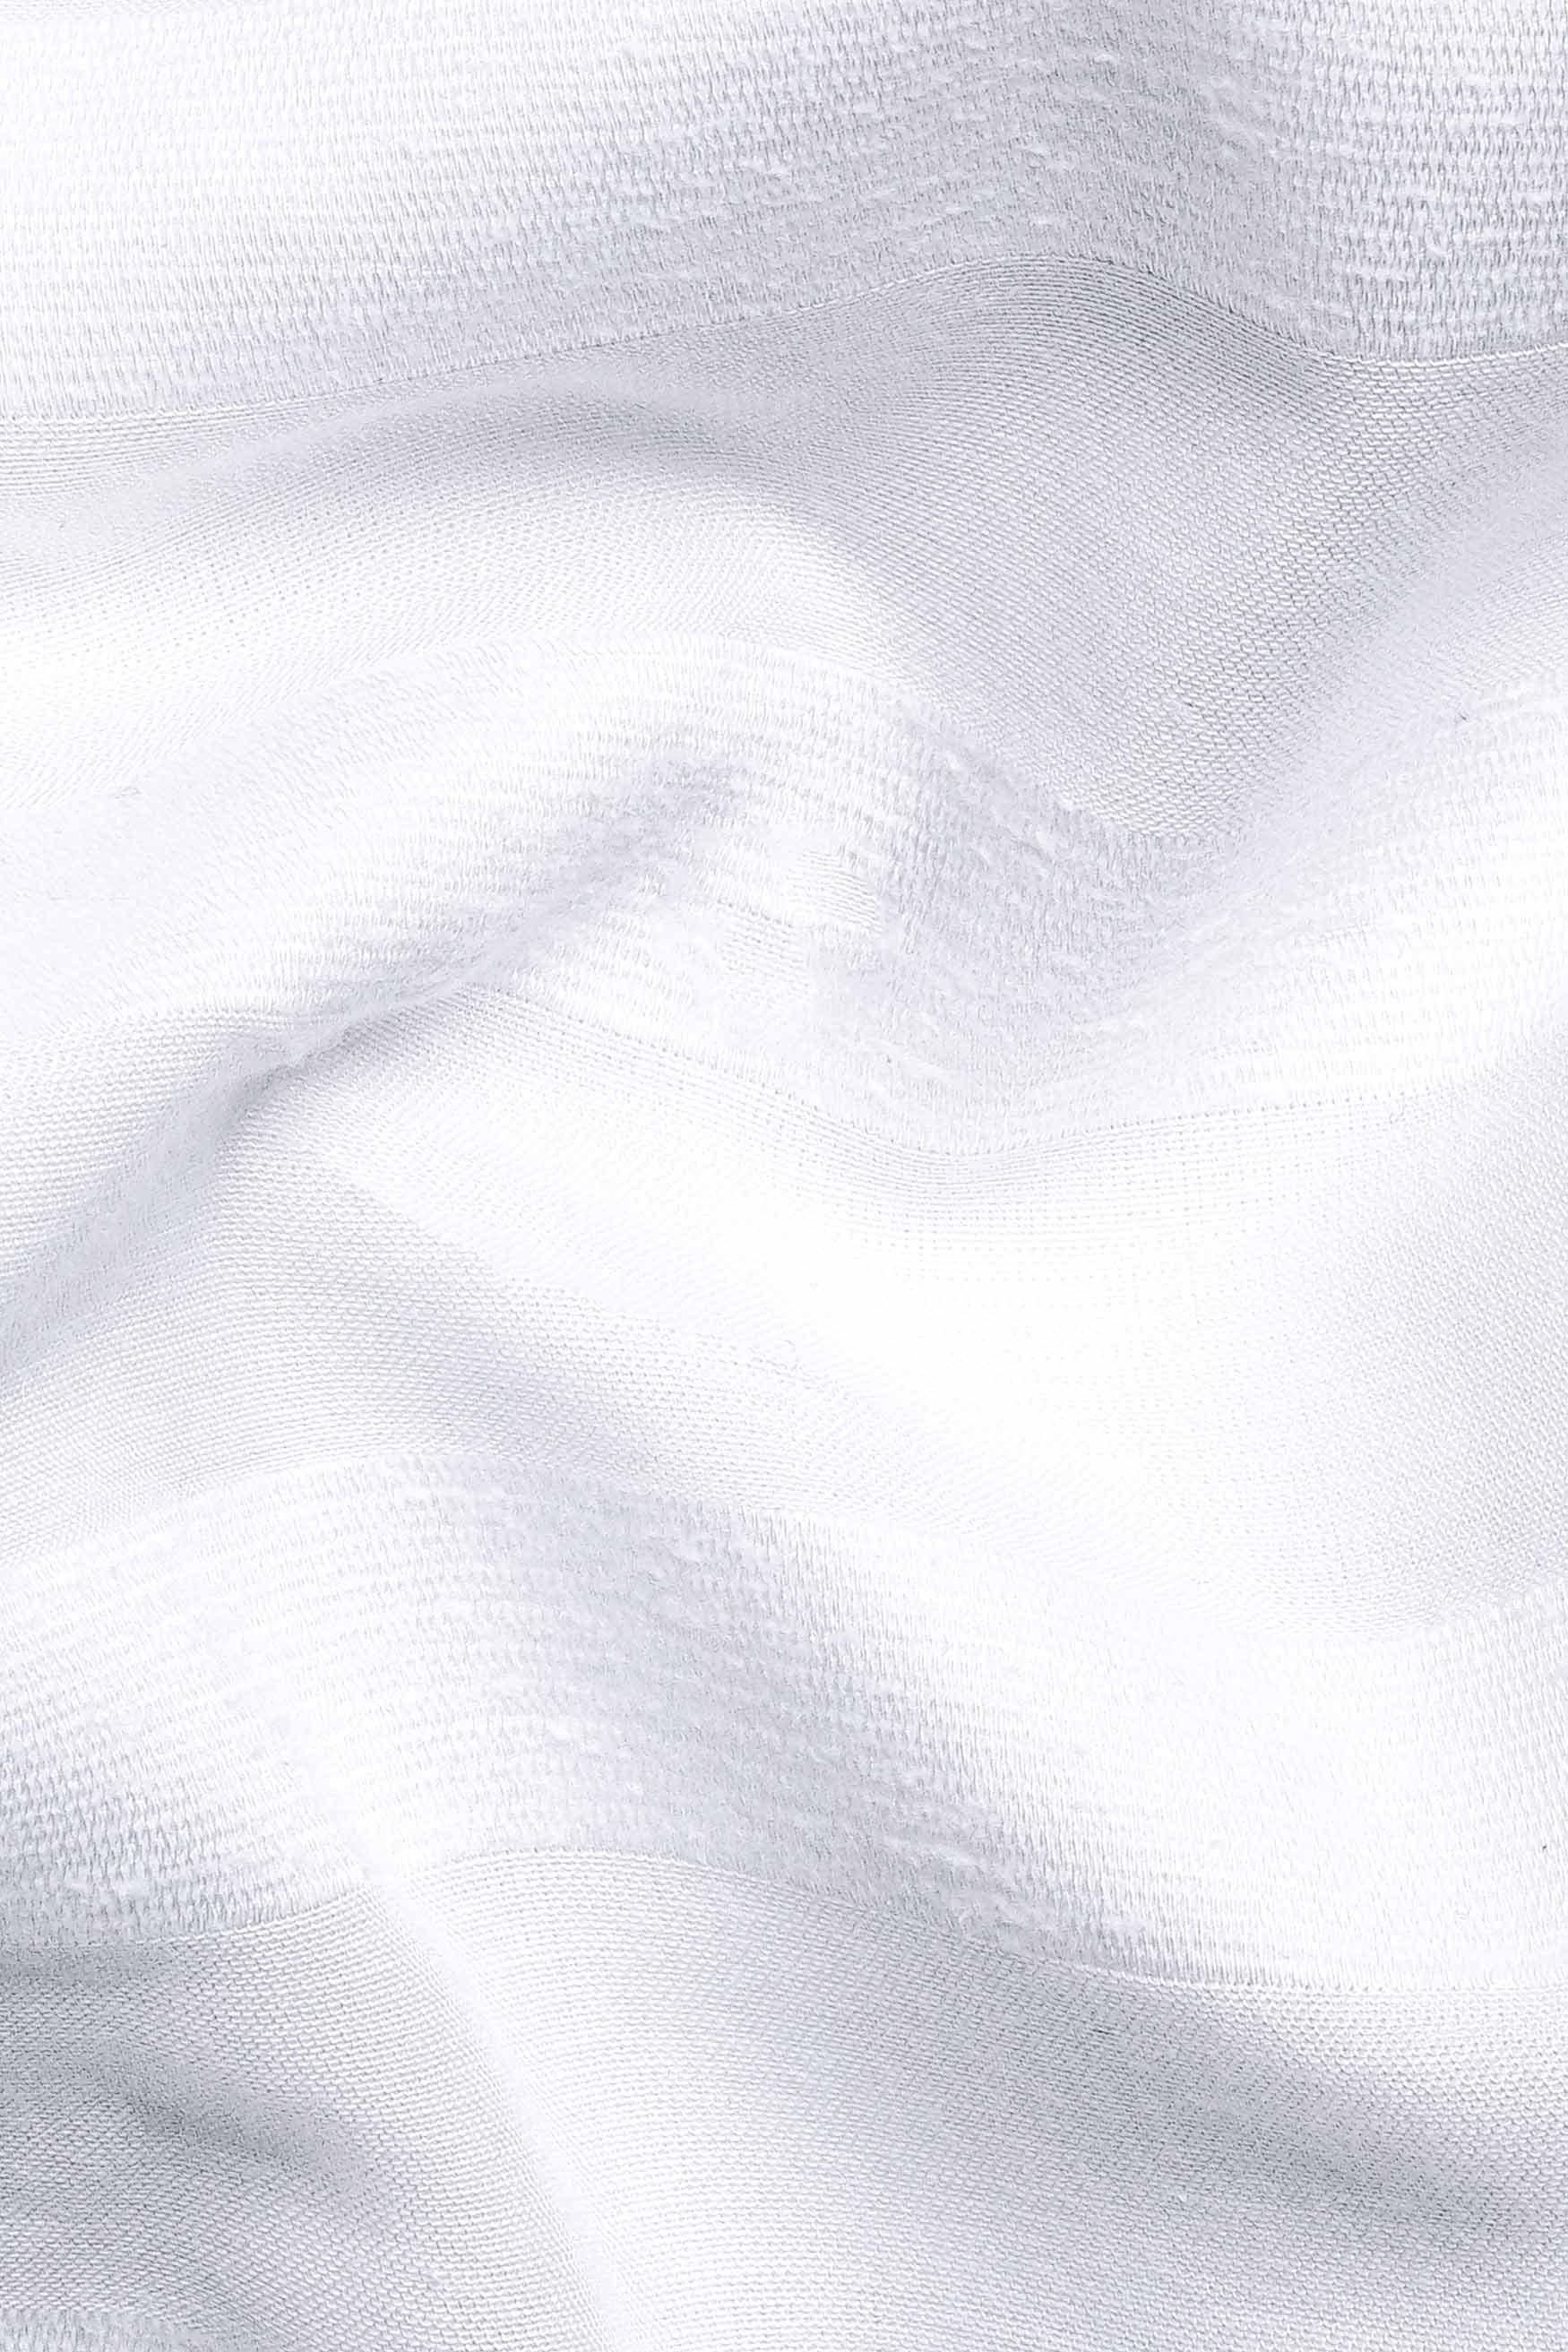 Bright White Velvet Striped Dobby Textured Premium Giza Cotton Shirt 11593-CA-38, 11593-CA-H-38, 11593-CA-39, 11593-CA-H-39, 11593-CA-40, 11593-CA-H-40, 11593-CA-42, 11593-CA-H-42, 11593-CA-44, 11593-CA-H-44, 11593-CA-46, 11593-CA-H-46, 11593-CA-48, 11593-CA-H-48, 11593-CA-50, 11593-CA-H-50, 11593-CA-52, 11593-CA-H-52